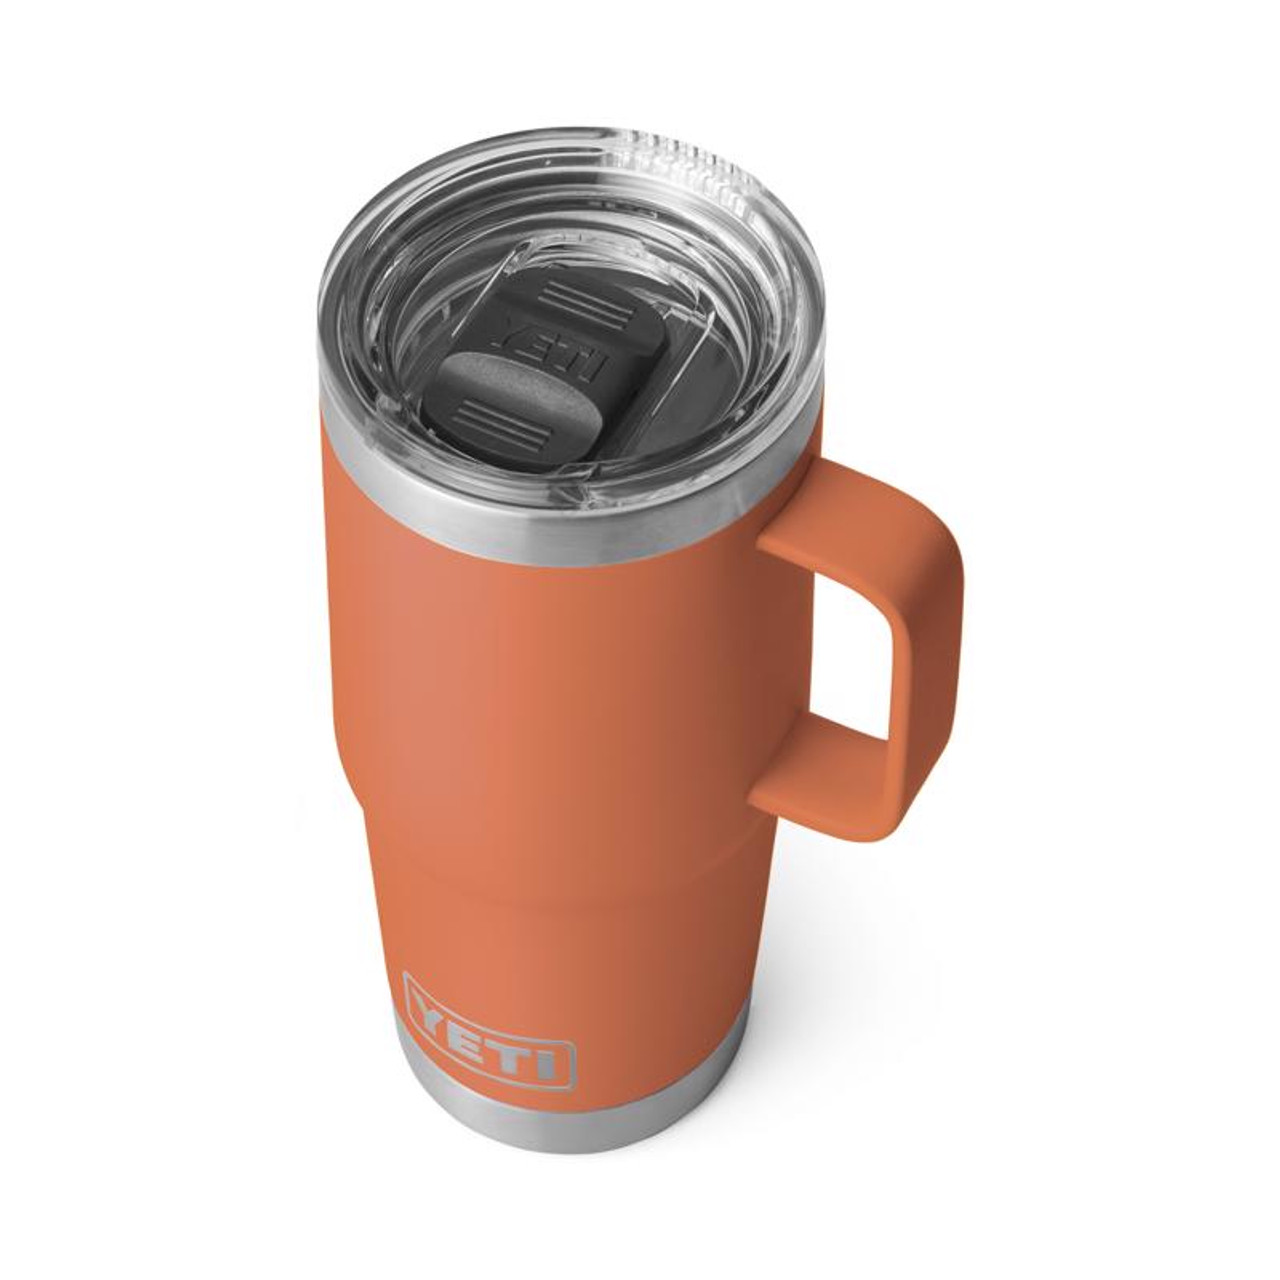 YETI Rambler 20 oz High Desert Clay BPA Free Travel Mug